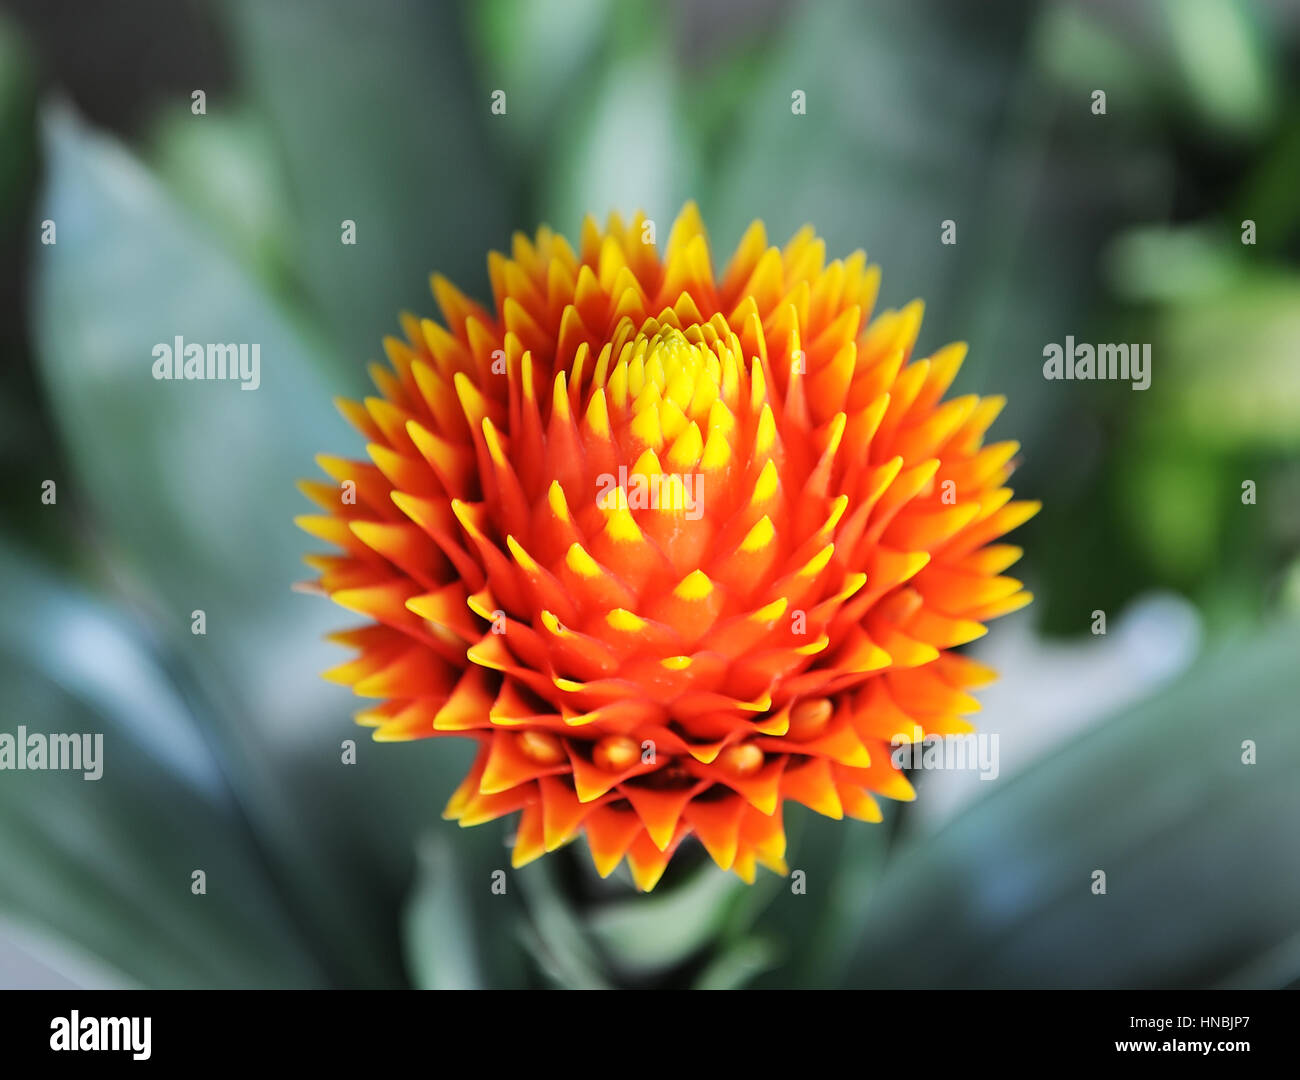 red color of Guzmania flower in garden. Stock Photo